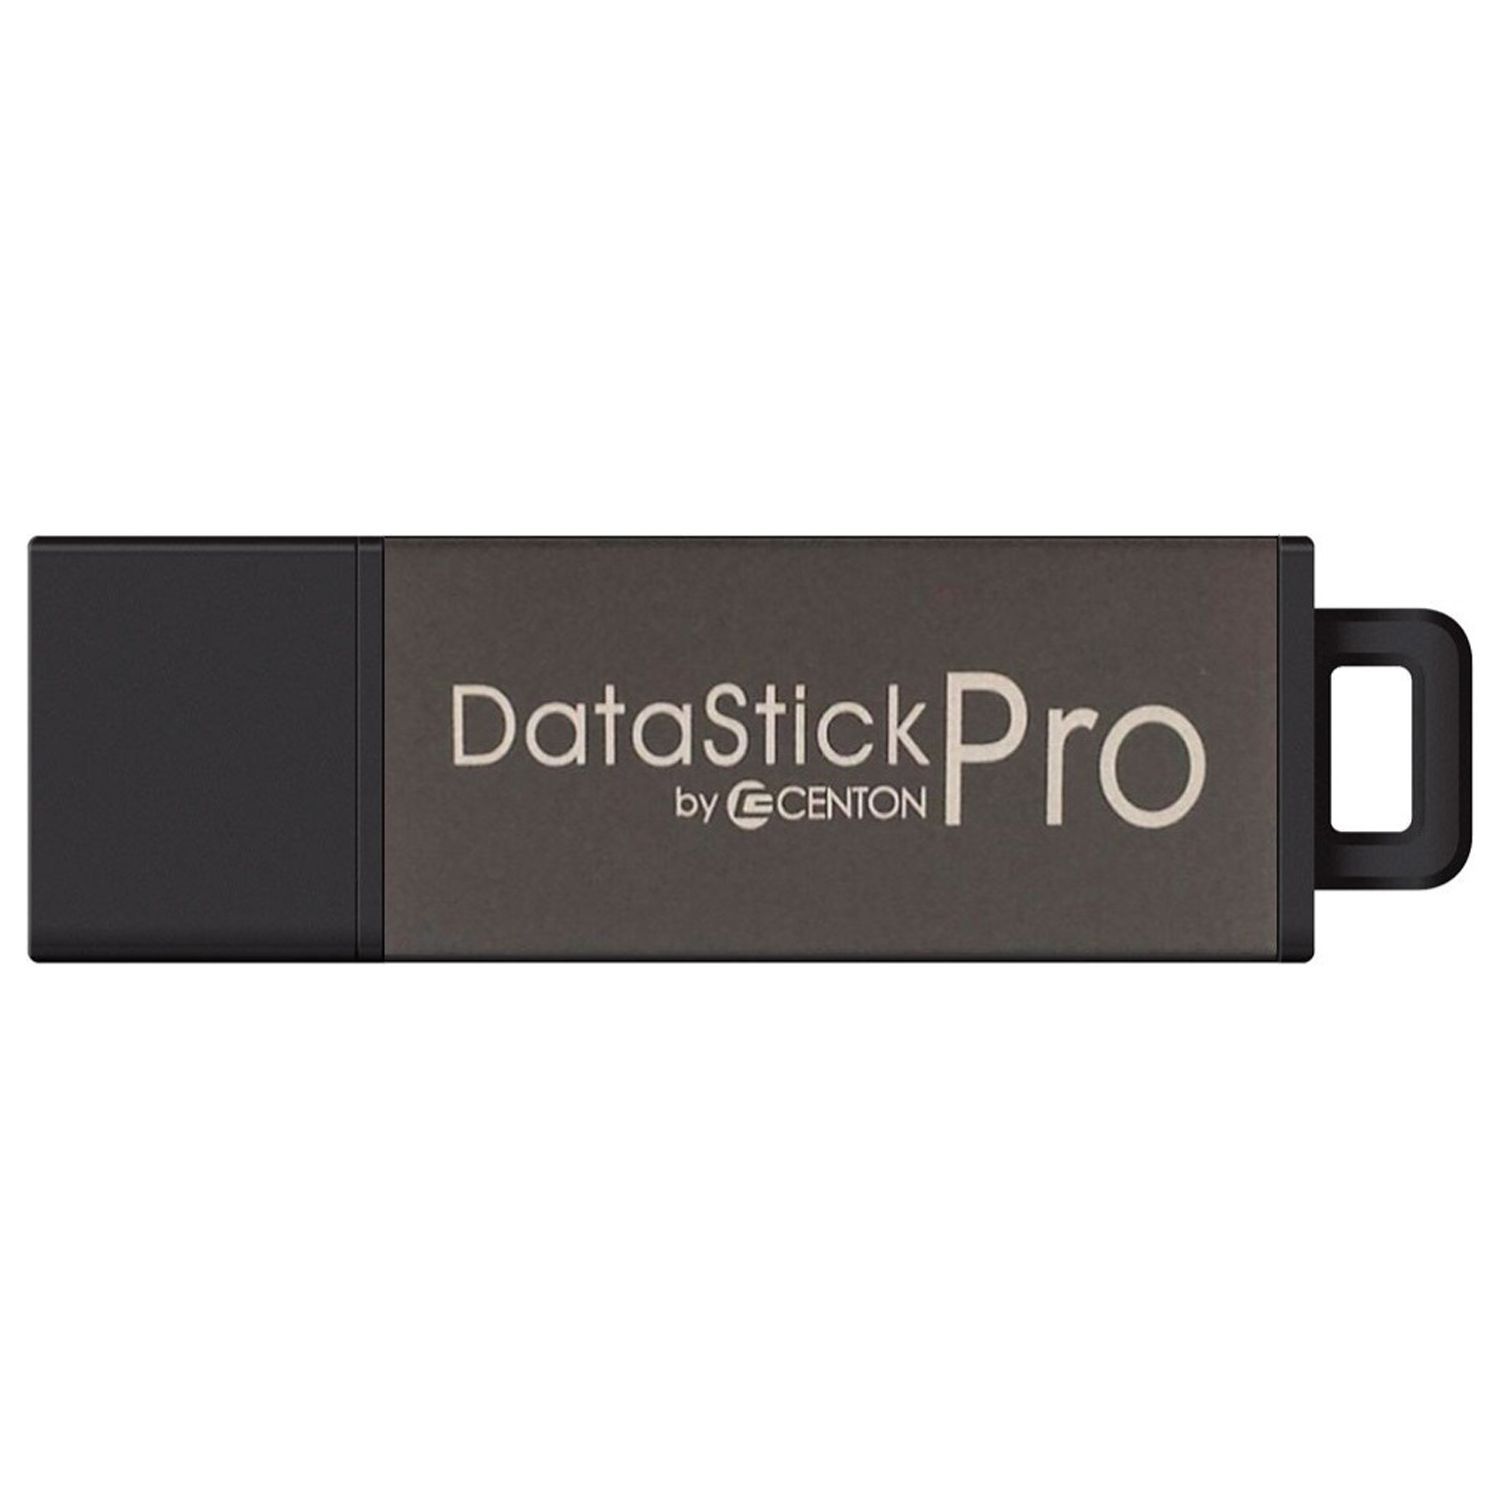 Centon USB 2.0 Datastick Pro (Grey) 8GB - image 1 of 2